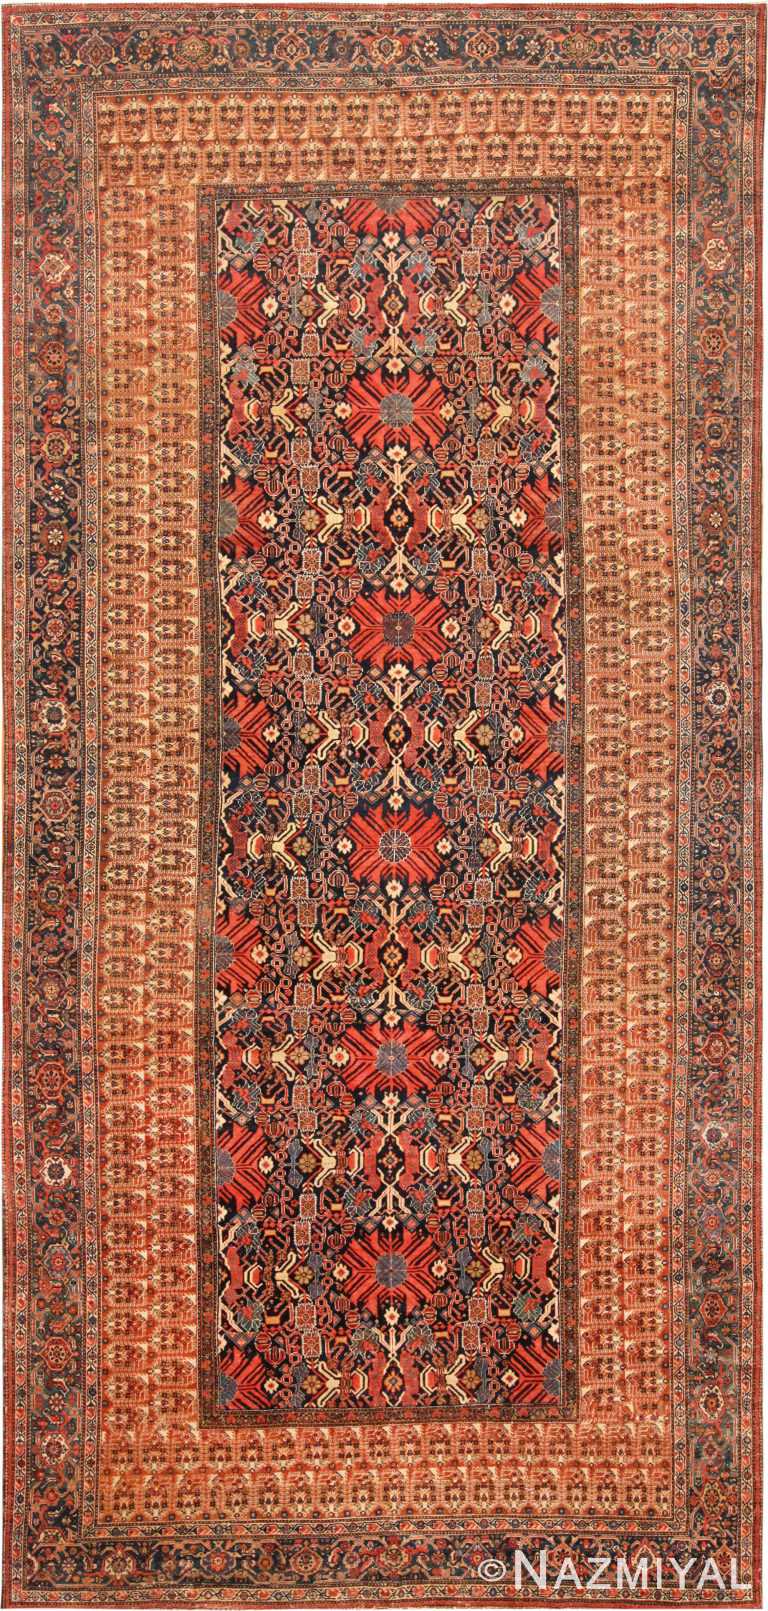 Antique Persian Farahan Rug 71990 by Nazmiyal Antique Rugs